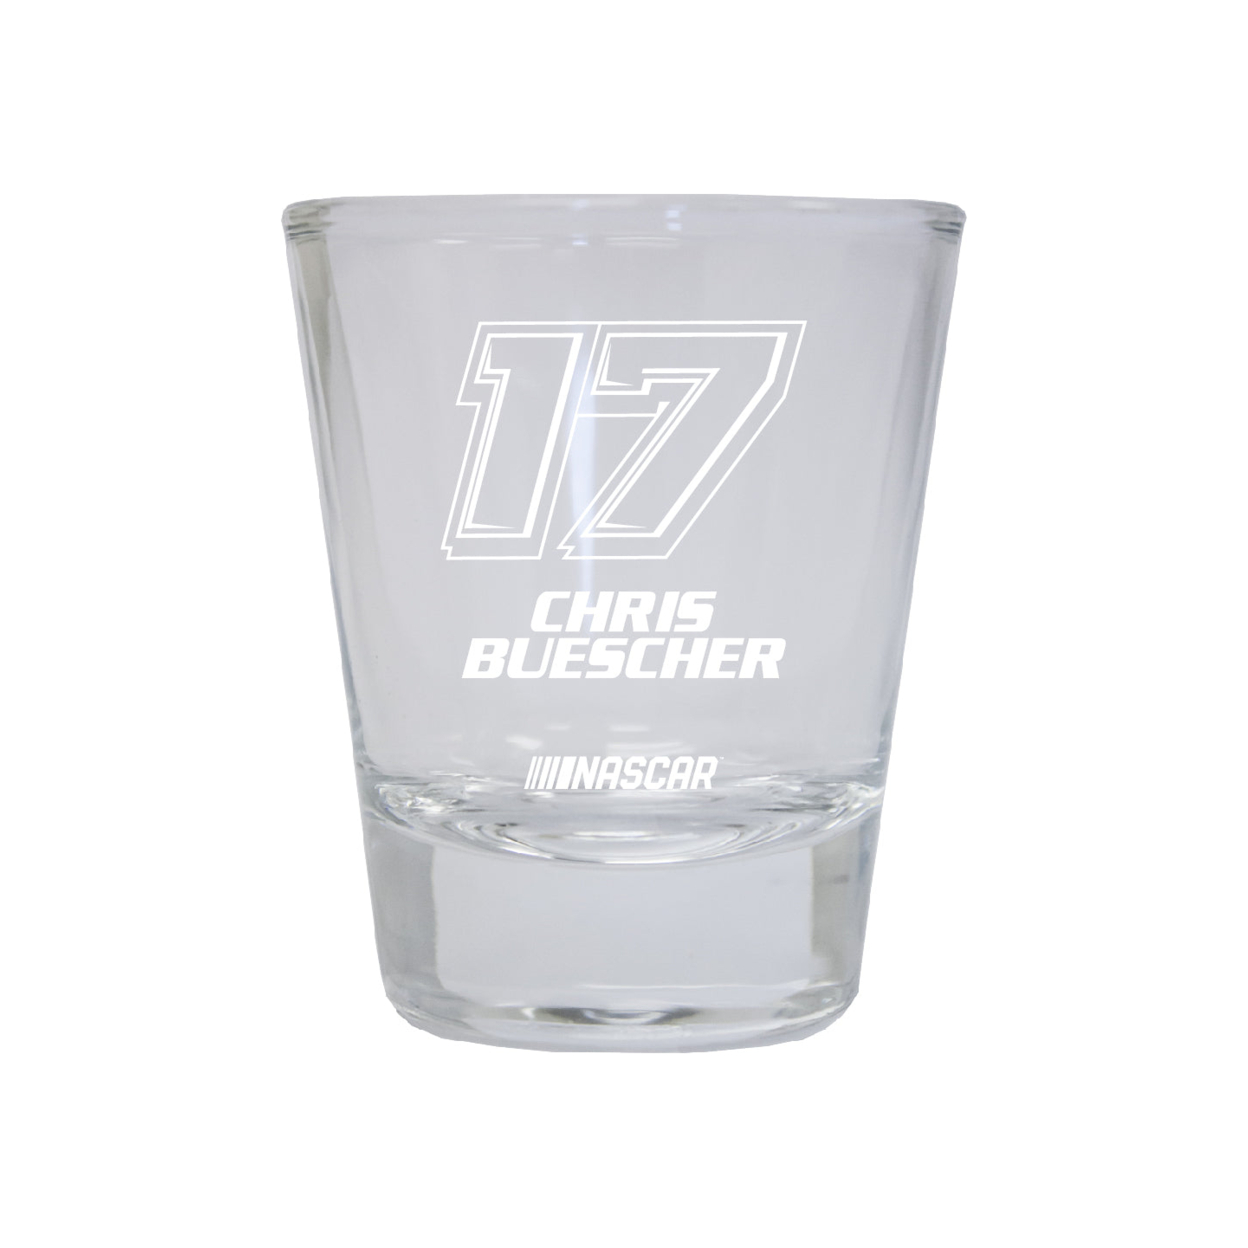 Chris Buescher #17 Nascar Etched Round Shot Glass New For 2022